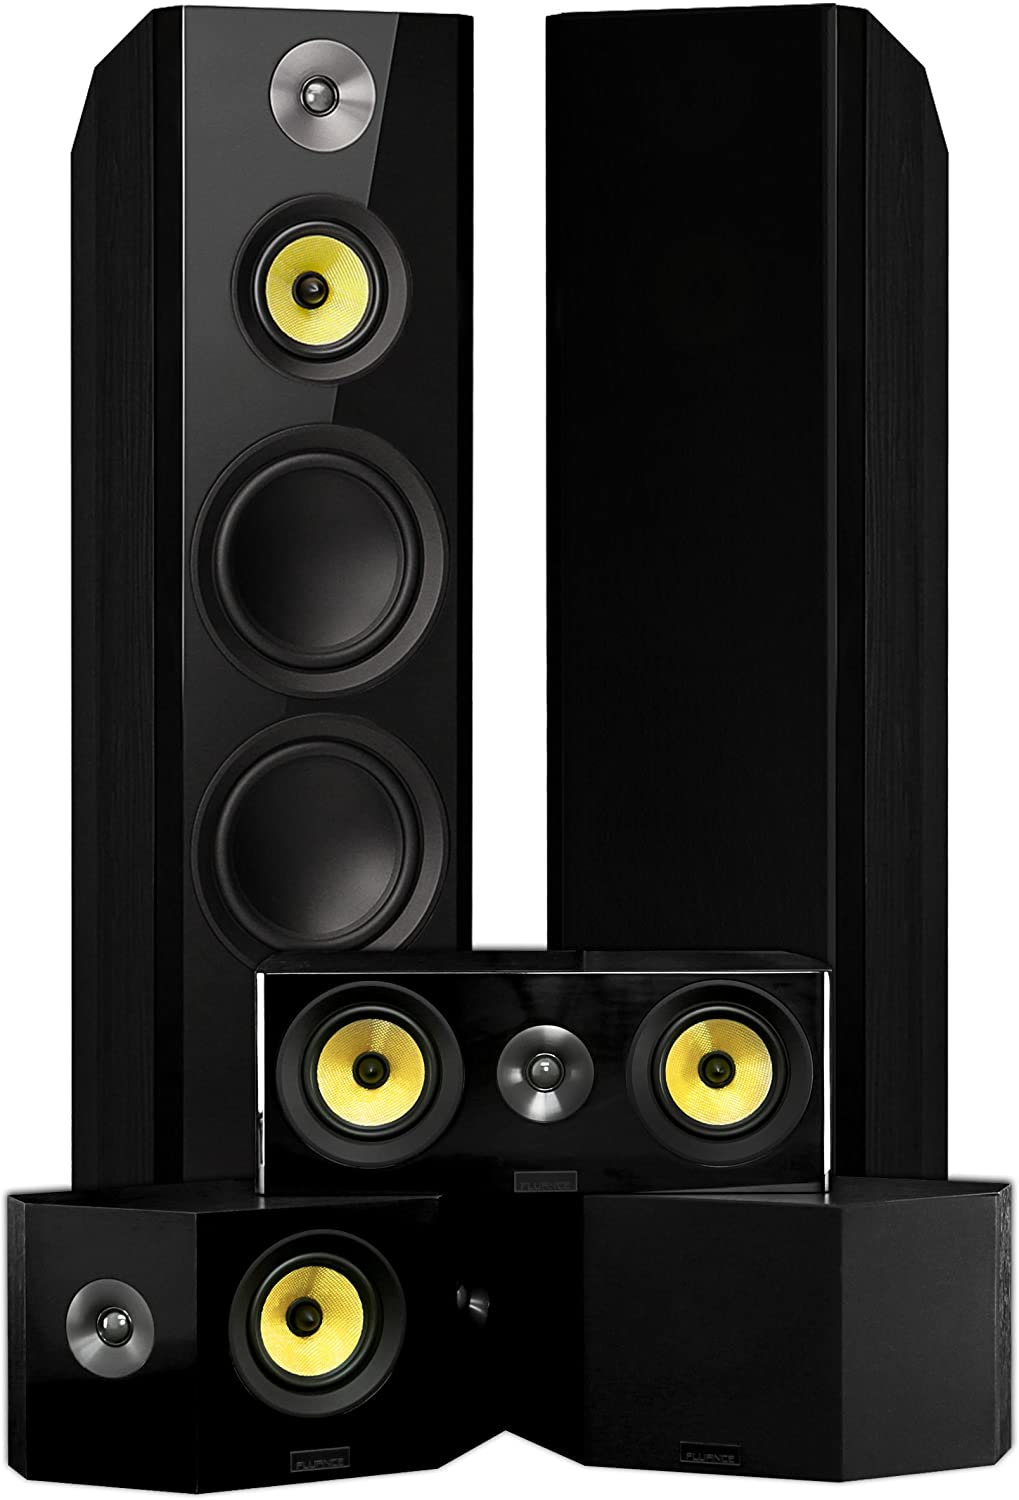 Fluance AVHTB Surround Sound Home Theater Speaker System